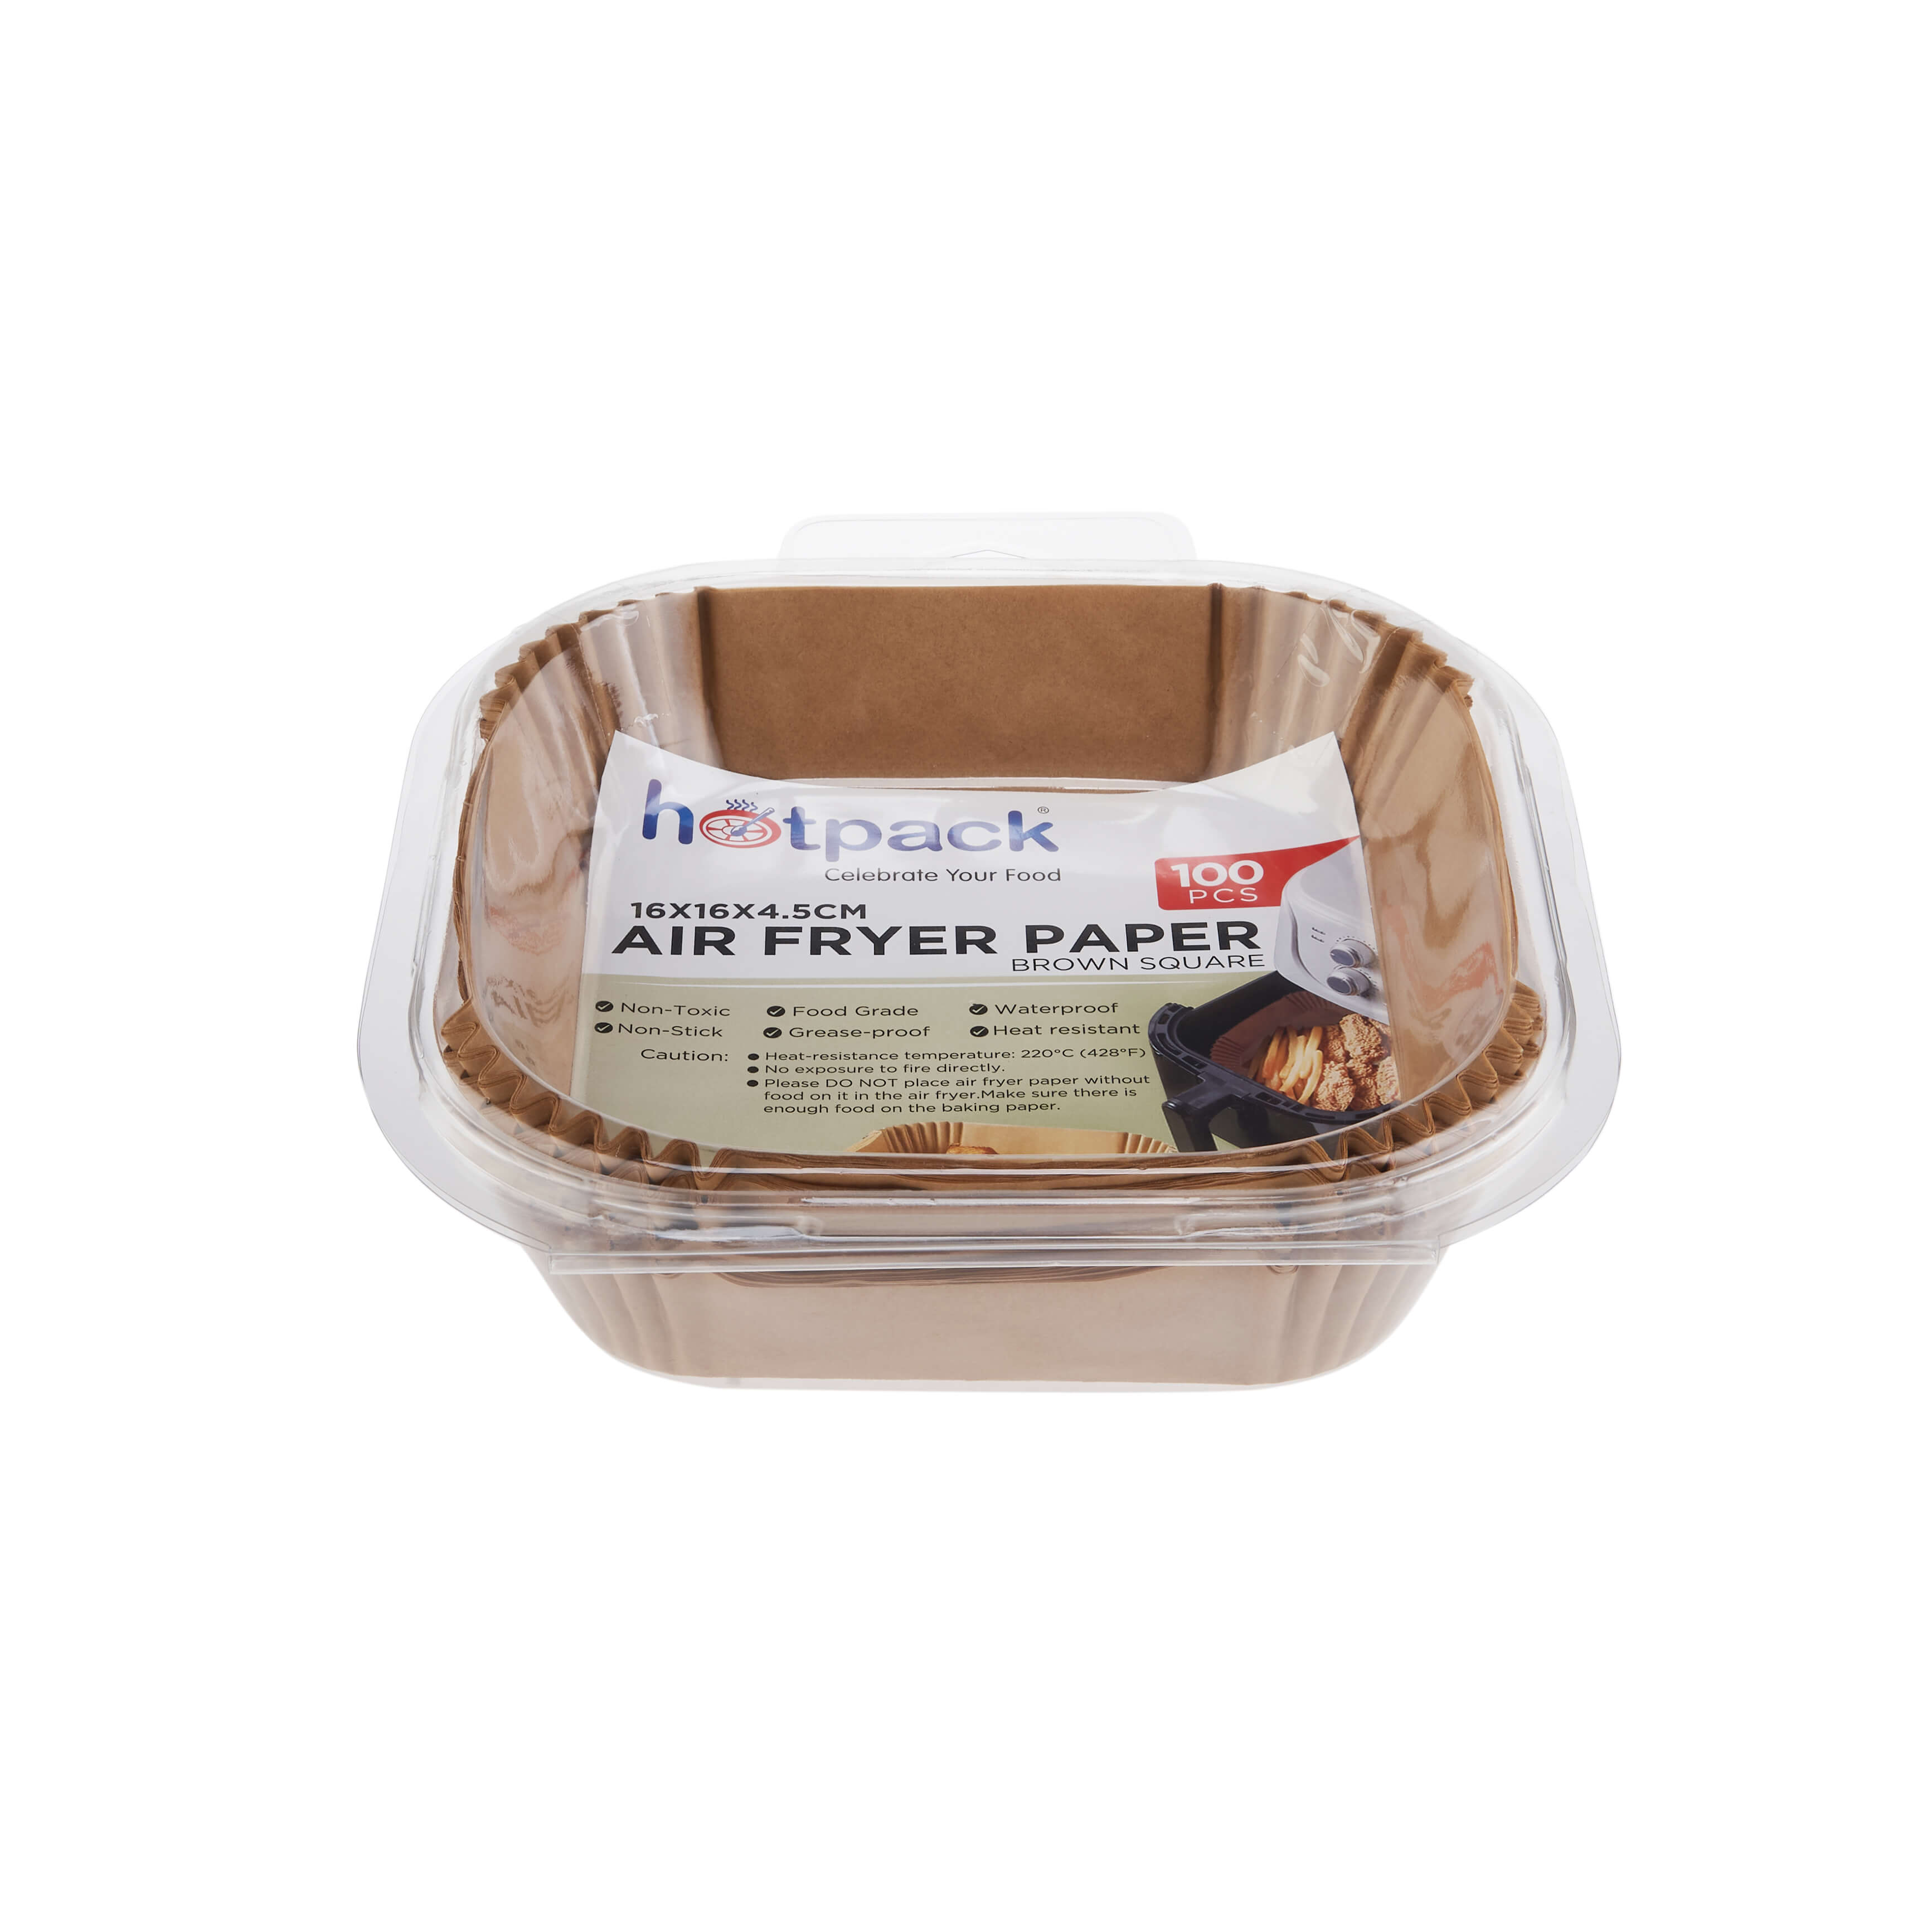 Air Fryer Paper Liner - hotpackwebstore.com